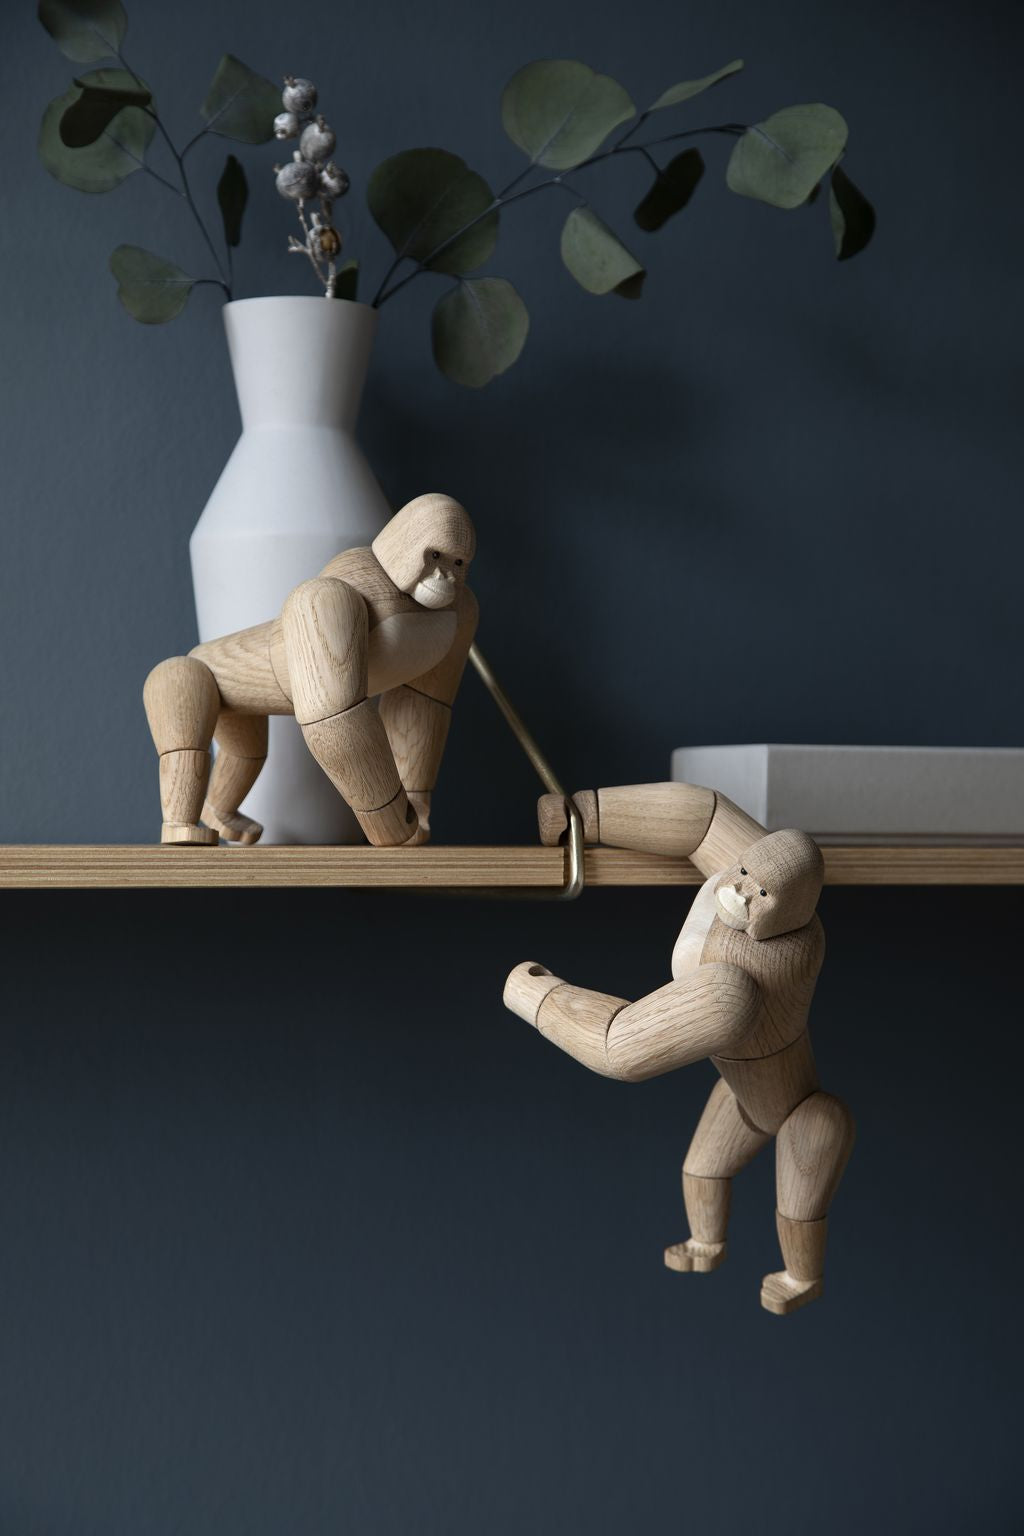 Novoform Design Figurine de décoration de gorille